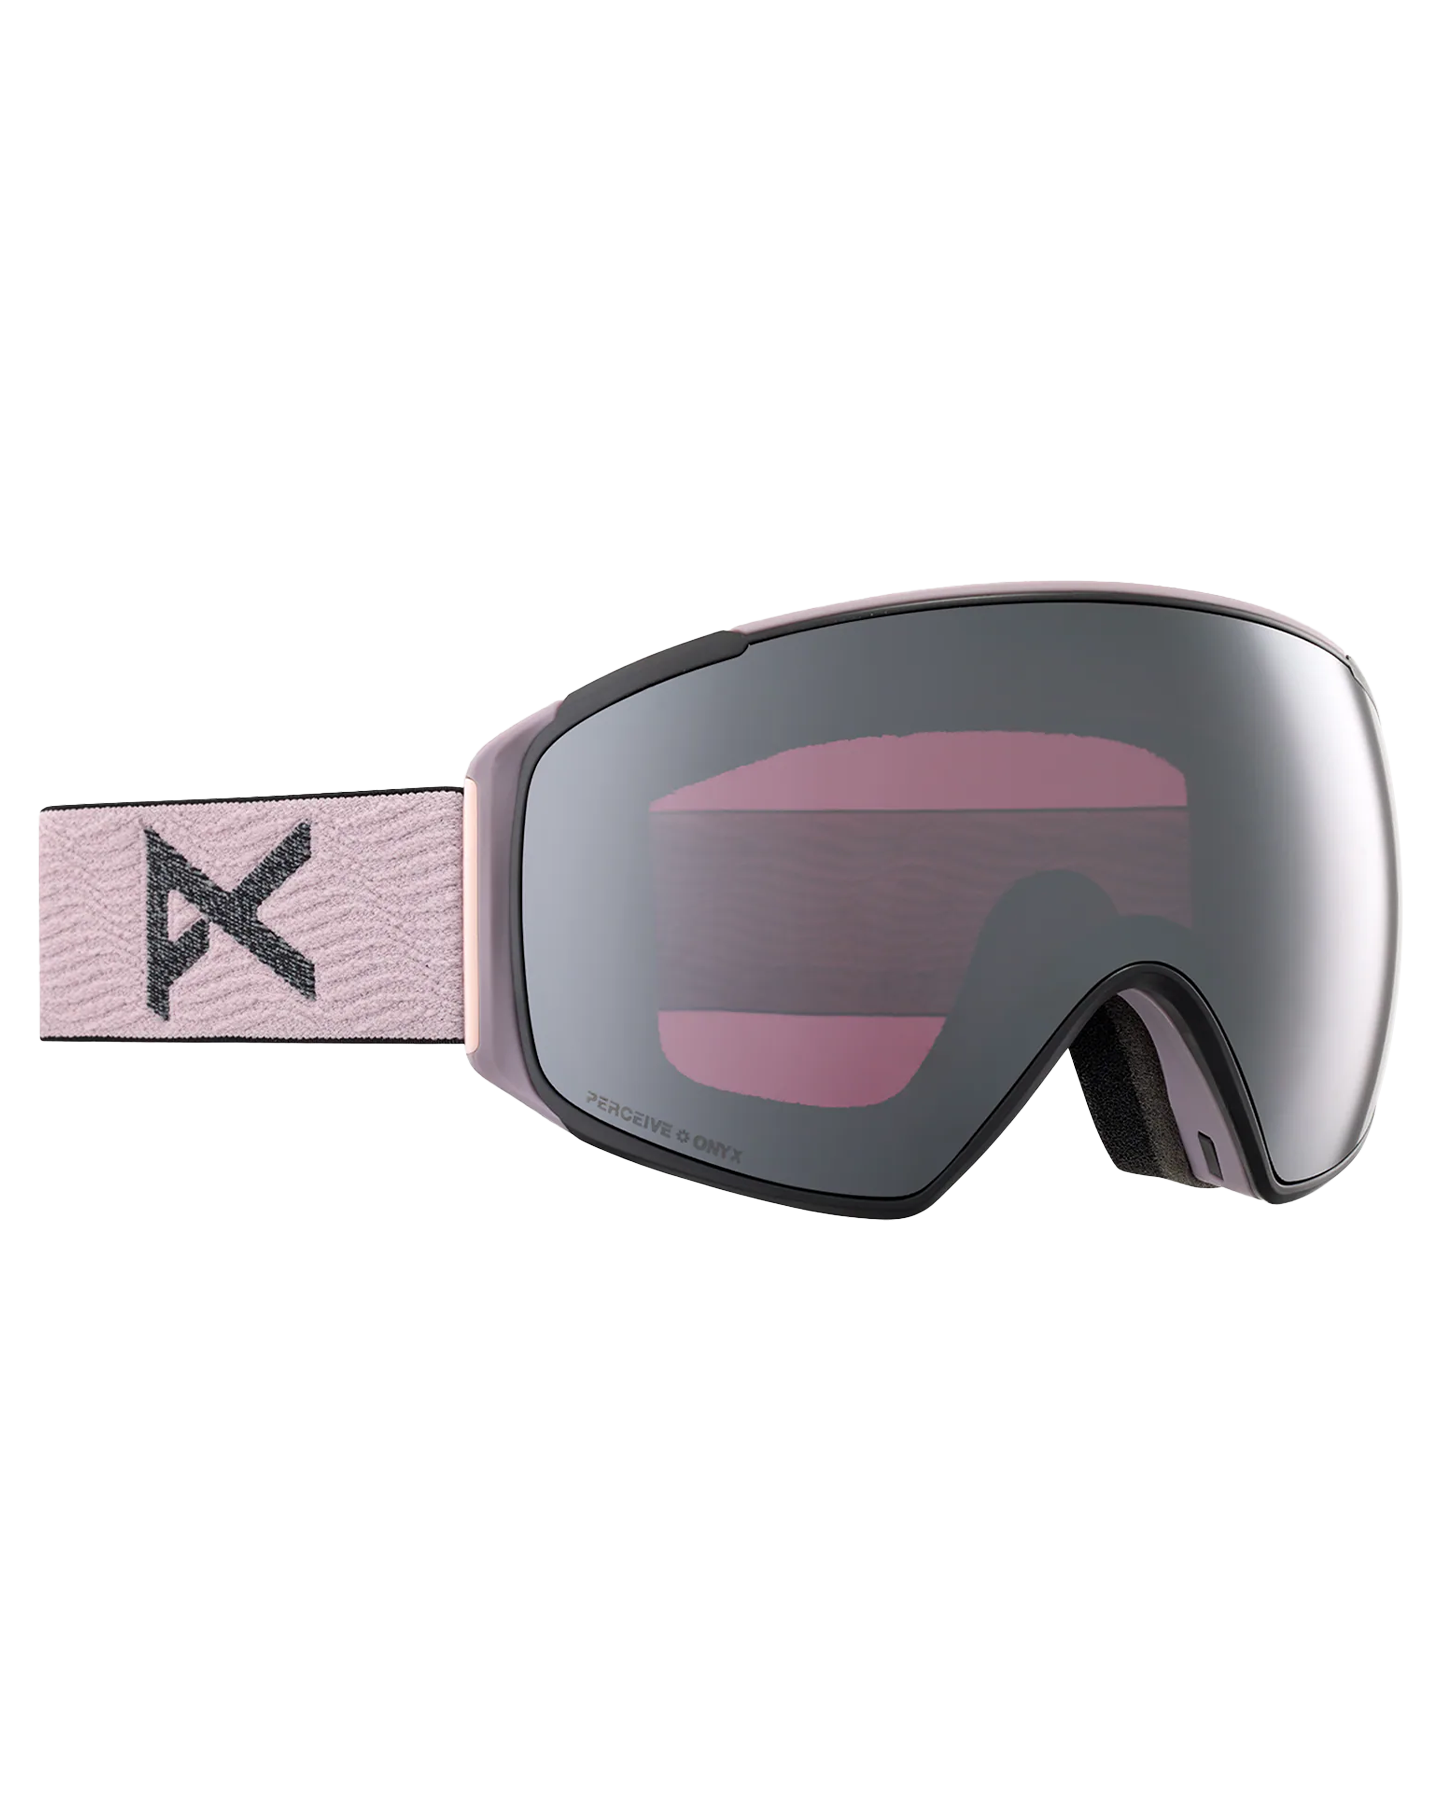 Anon M4S Toric Snow Goggles + Bonus Lens + Mfi® Face Mask - Elderberry/Perceive Sunny Onyx Lens Men's Snow Goggles - Trojan Wake Ski Snow